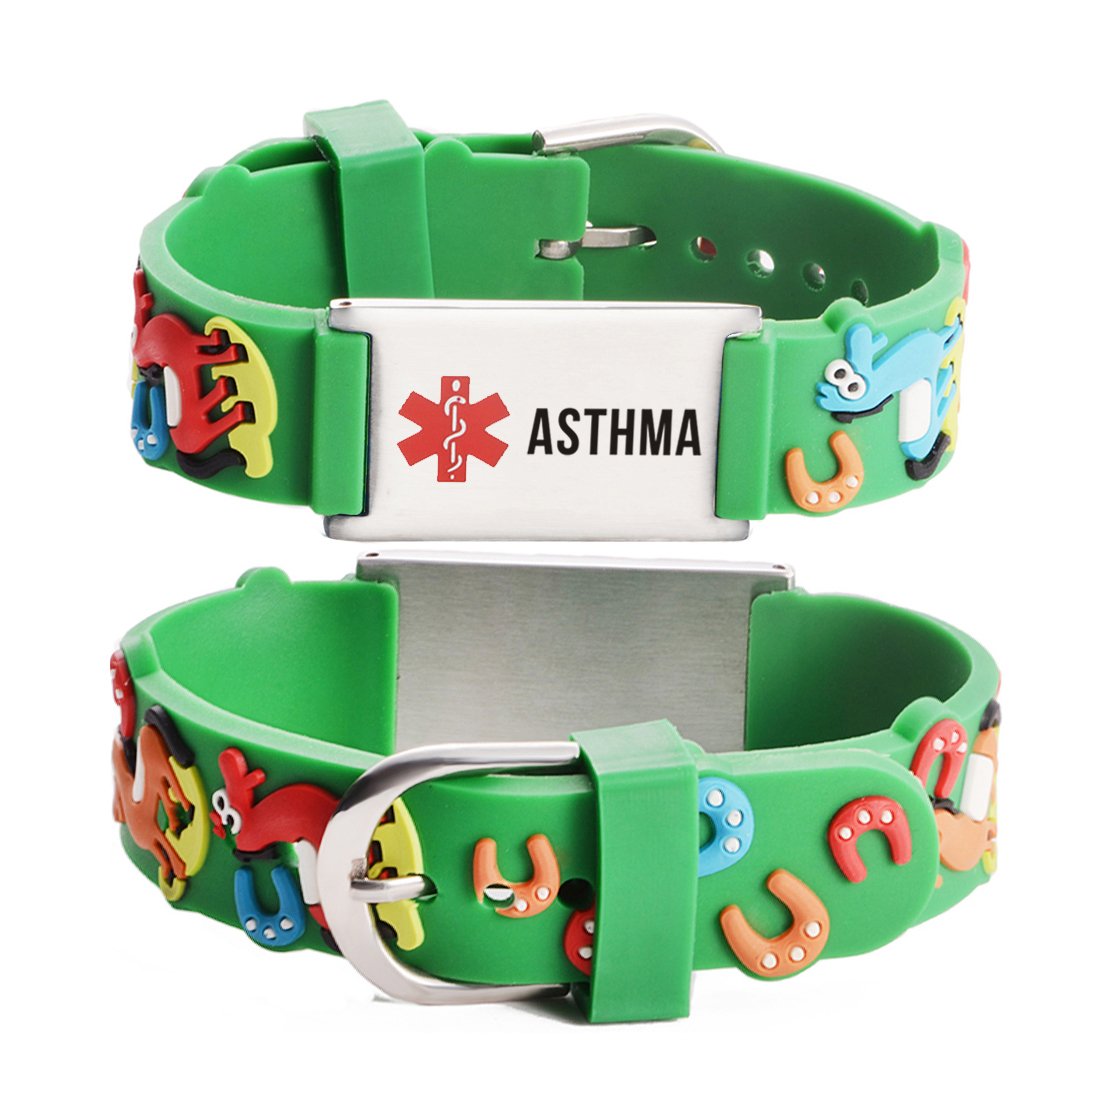 ASTHMA bracelets for kids-Carousel